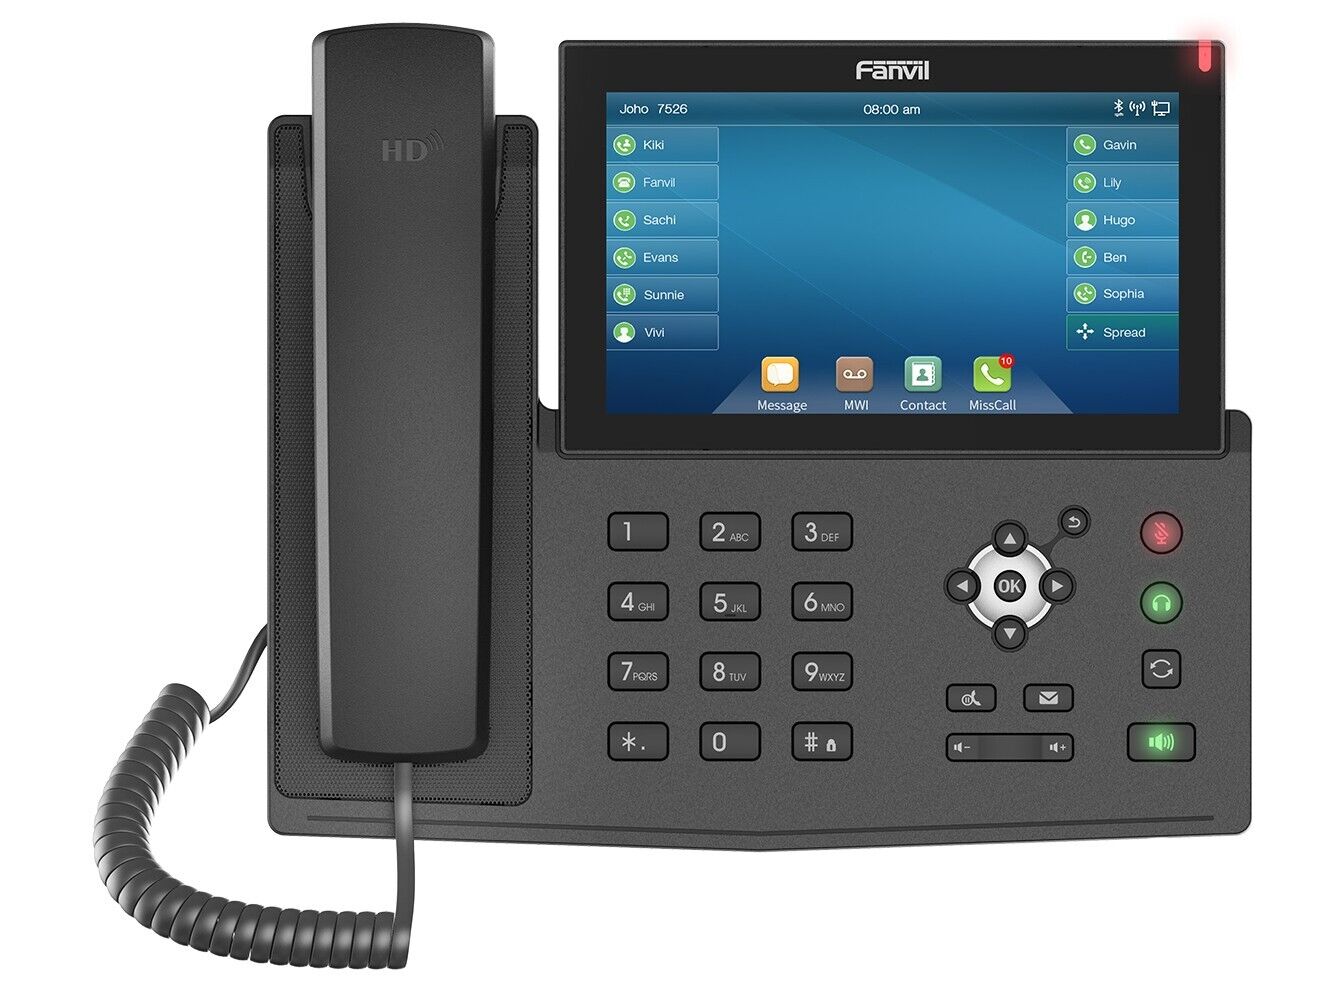 New Fanvil X7 Executive level IP Phone - 7